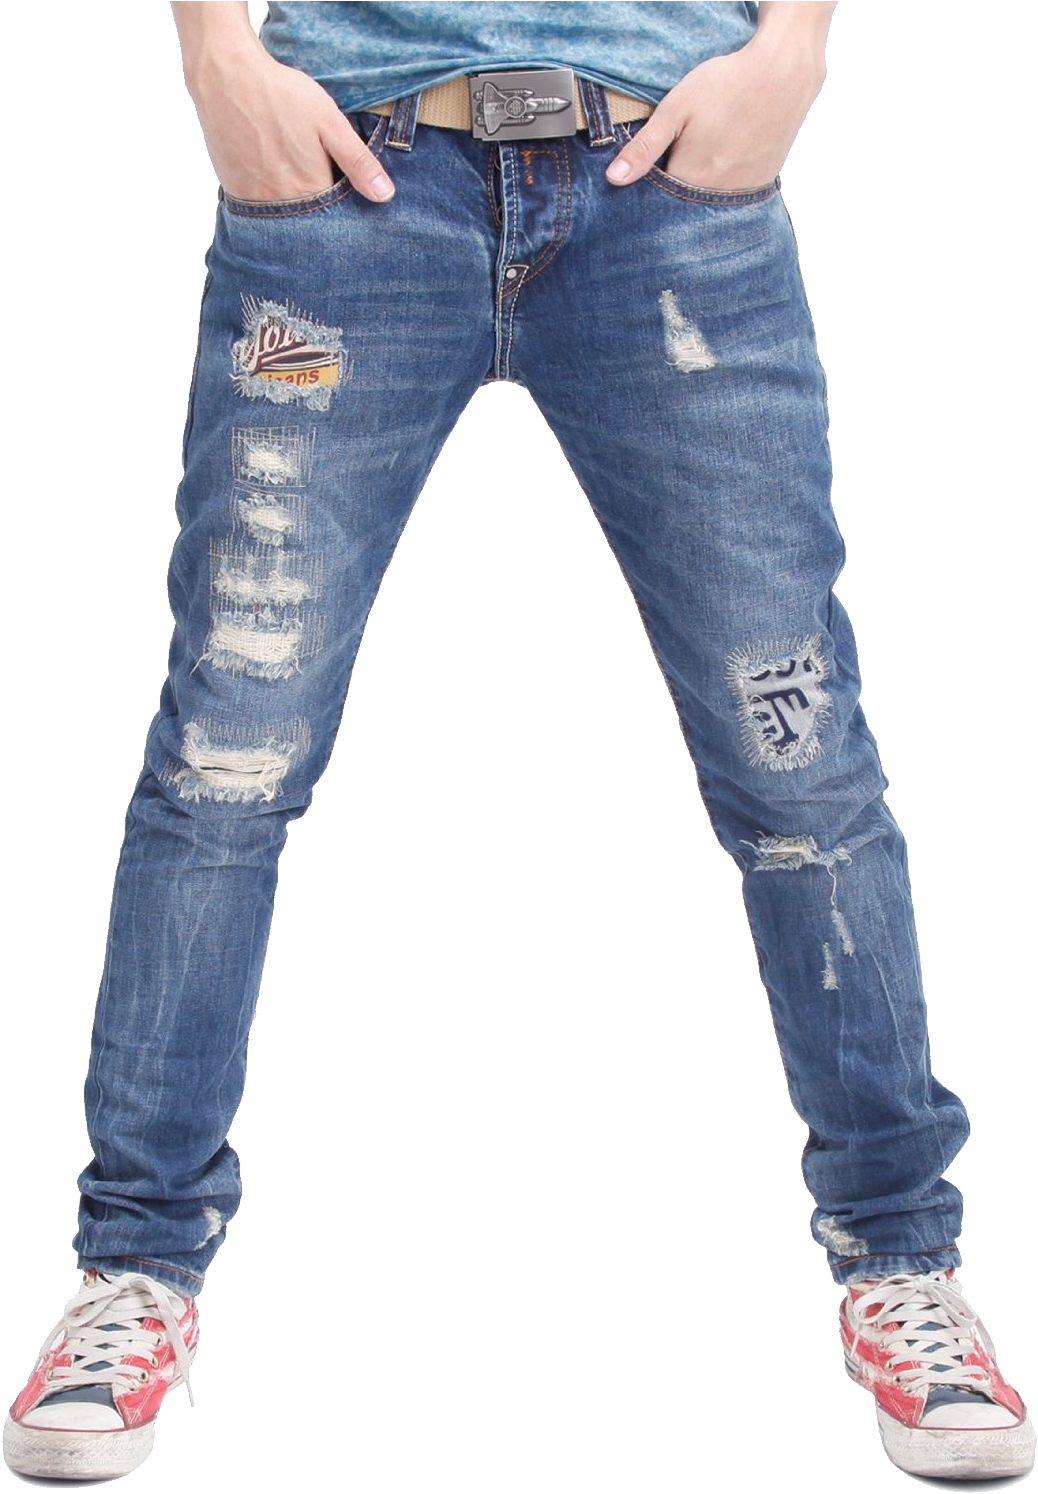 Stylish Distressed Jeans Fashion